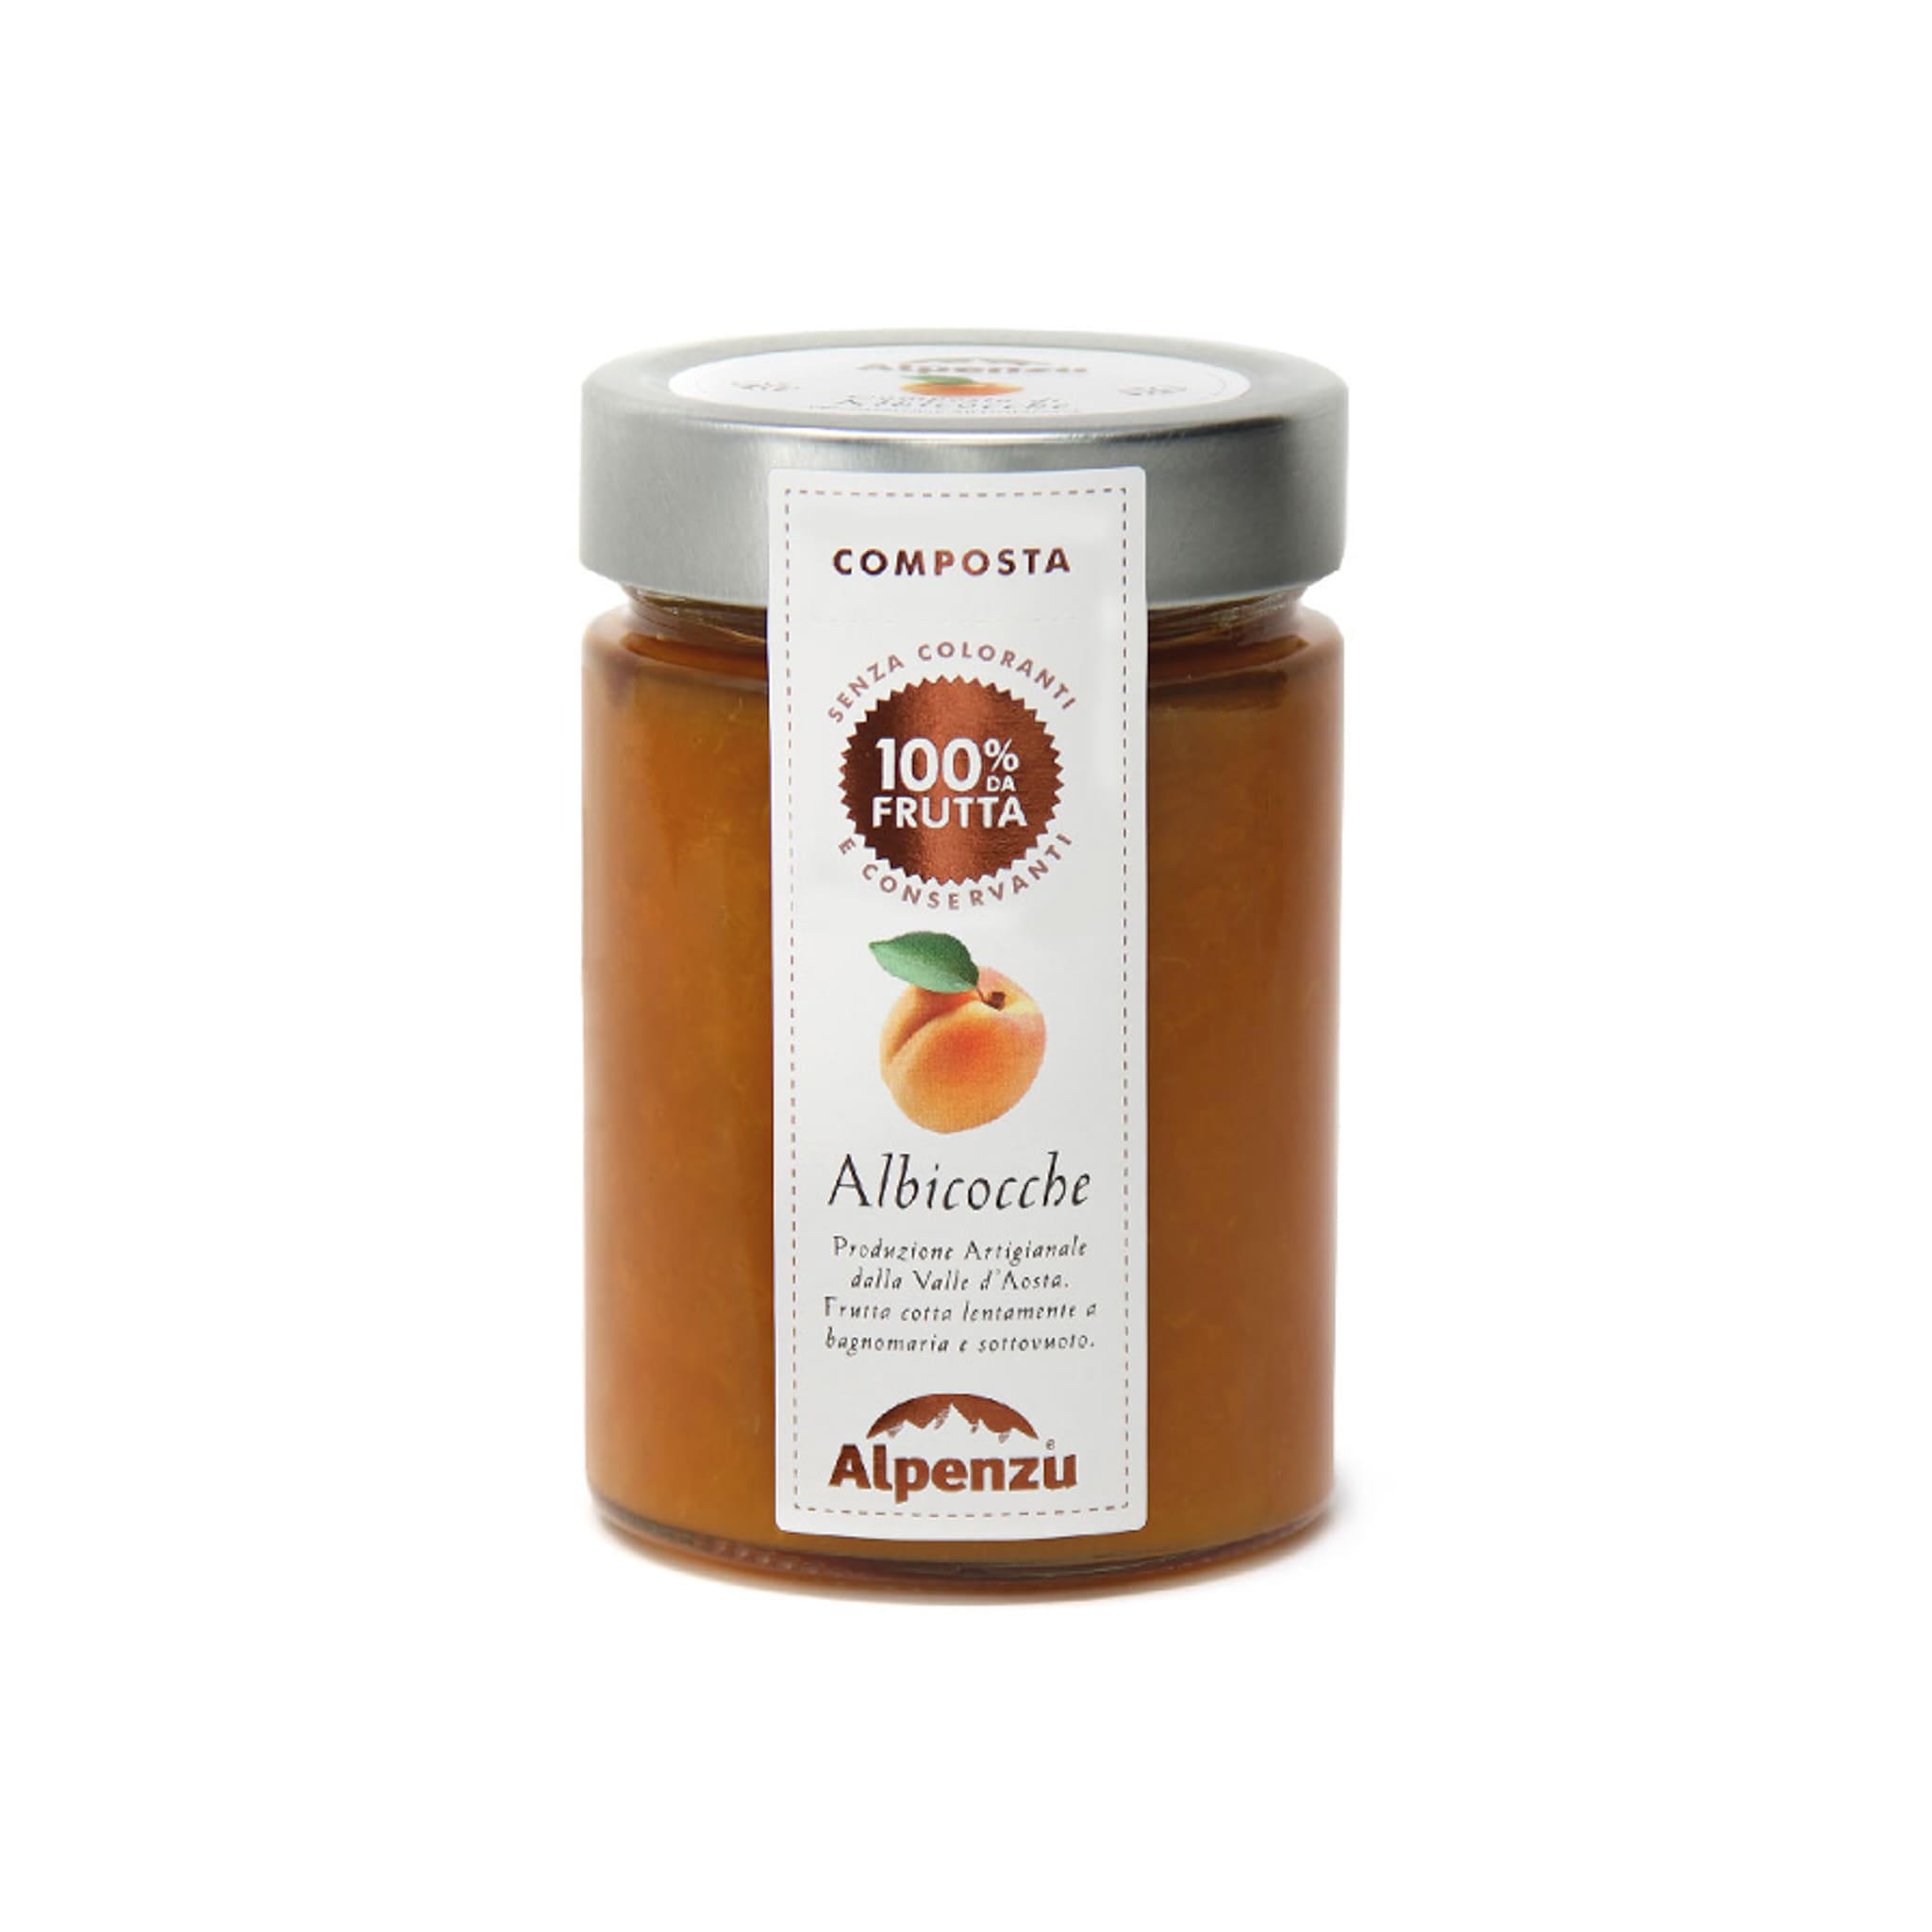 Alpenzu Apricot Preserve 100% Fruit Jam 350g